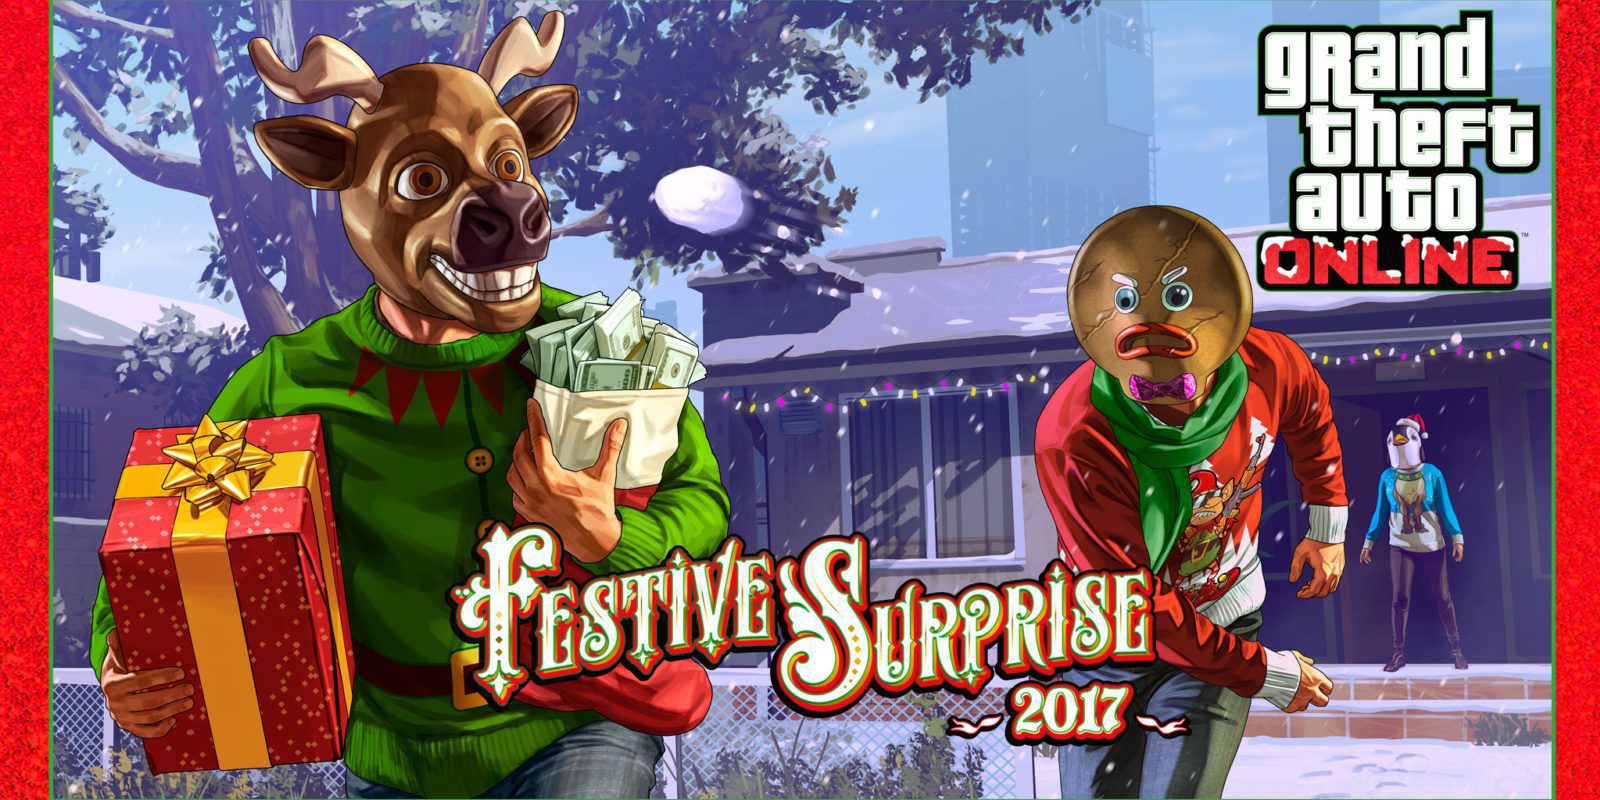 'GTA Online': 'La sorpresa festiva 2017' ya está disponible